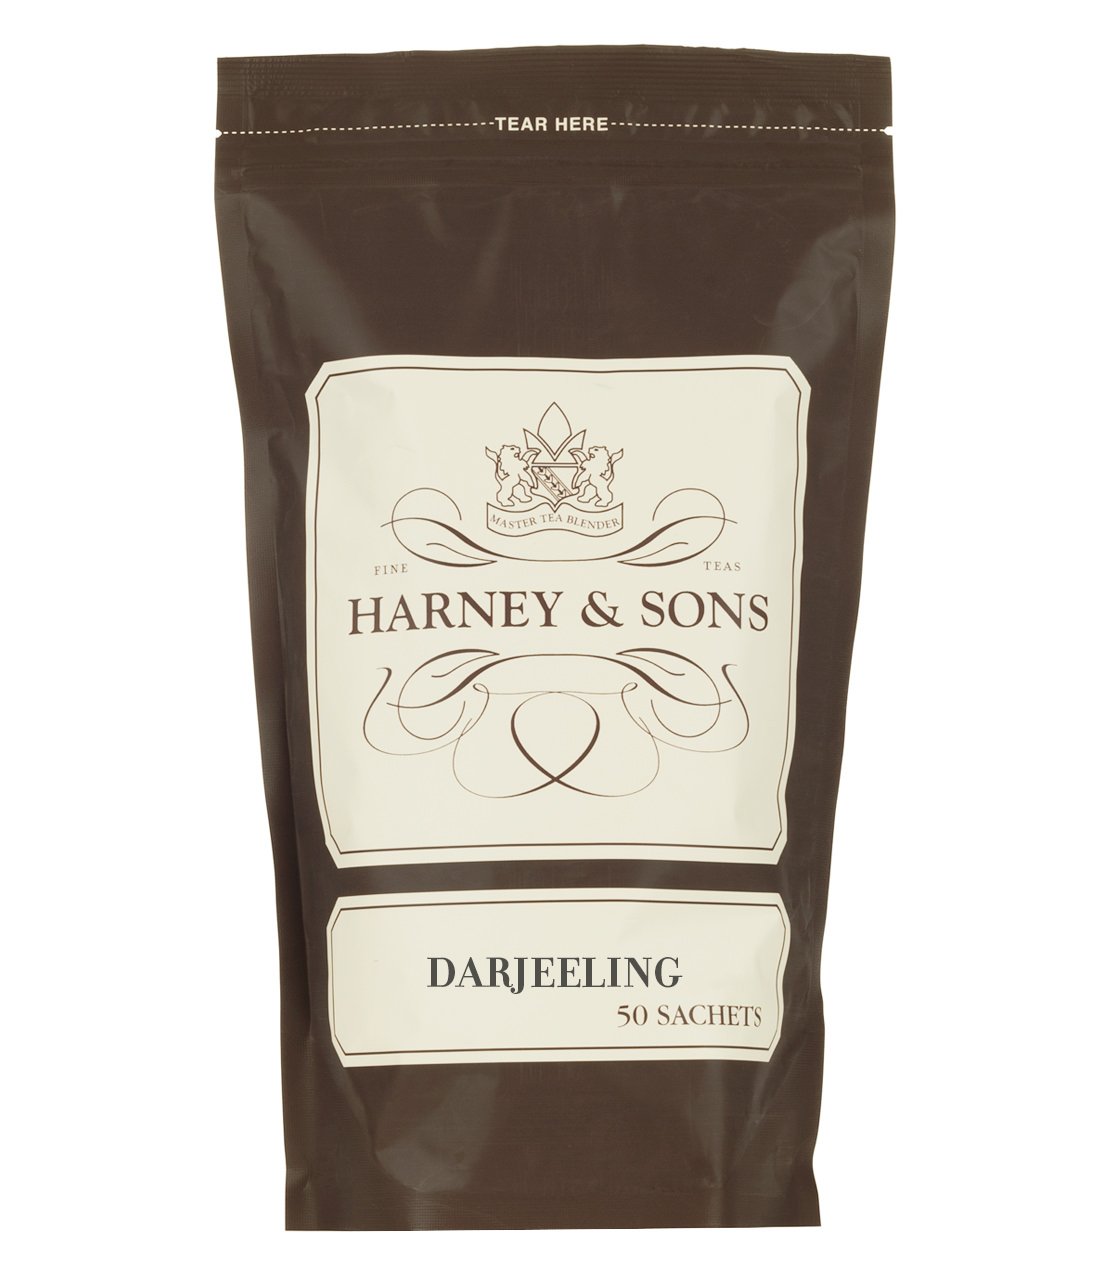 Darjeeling - Bag of 50 Sachets - Harney & Sons Fine Teas Europe